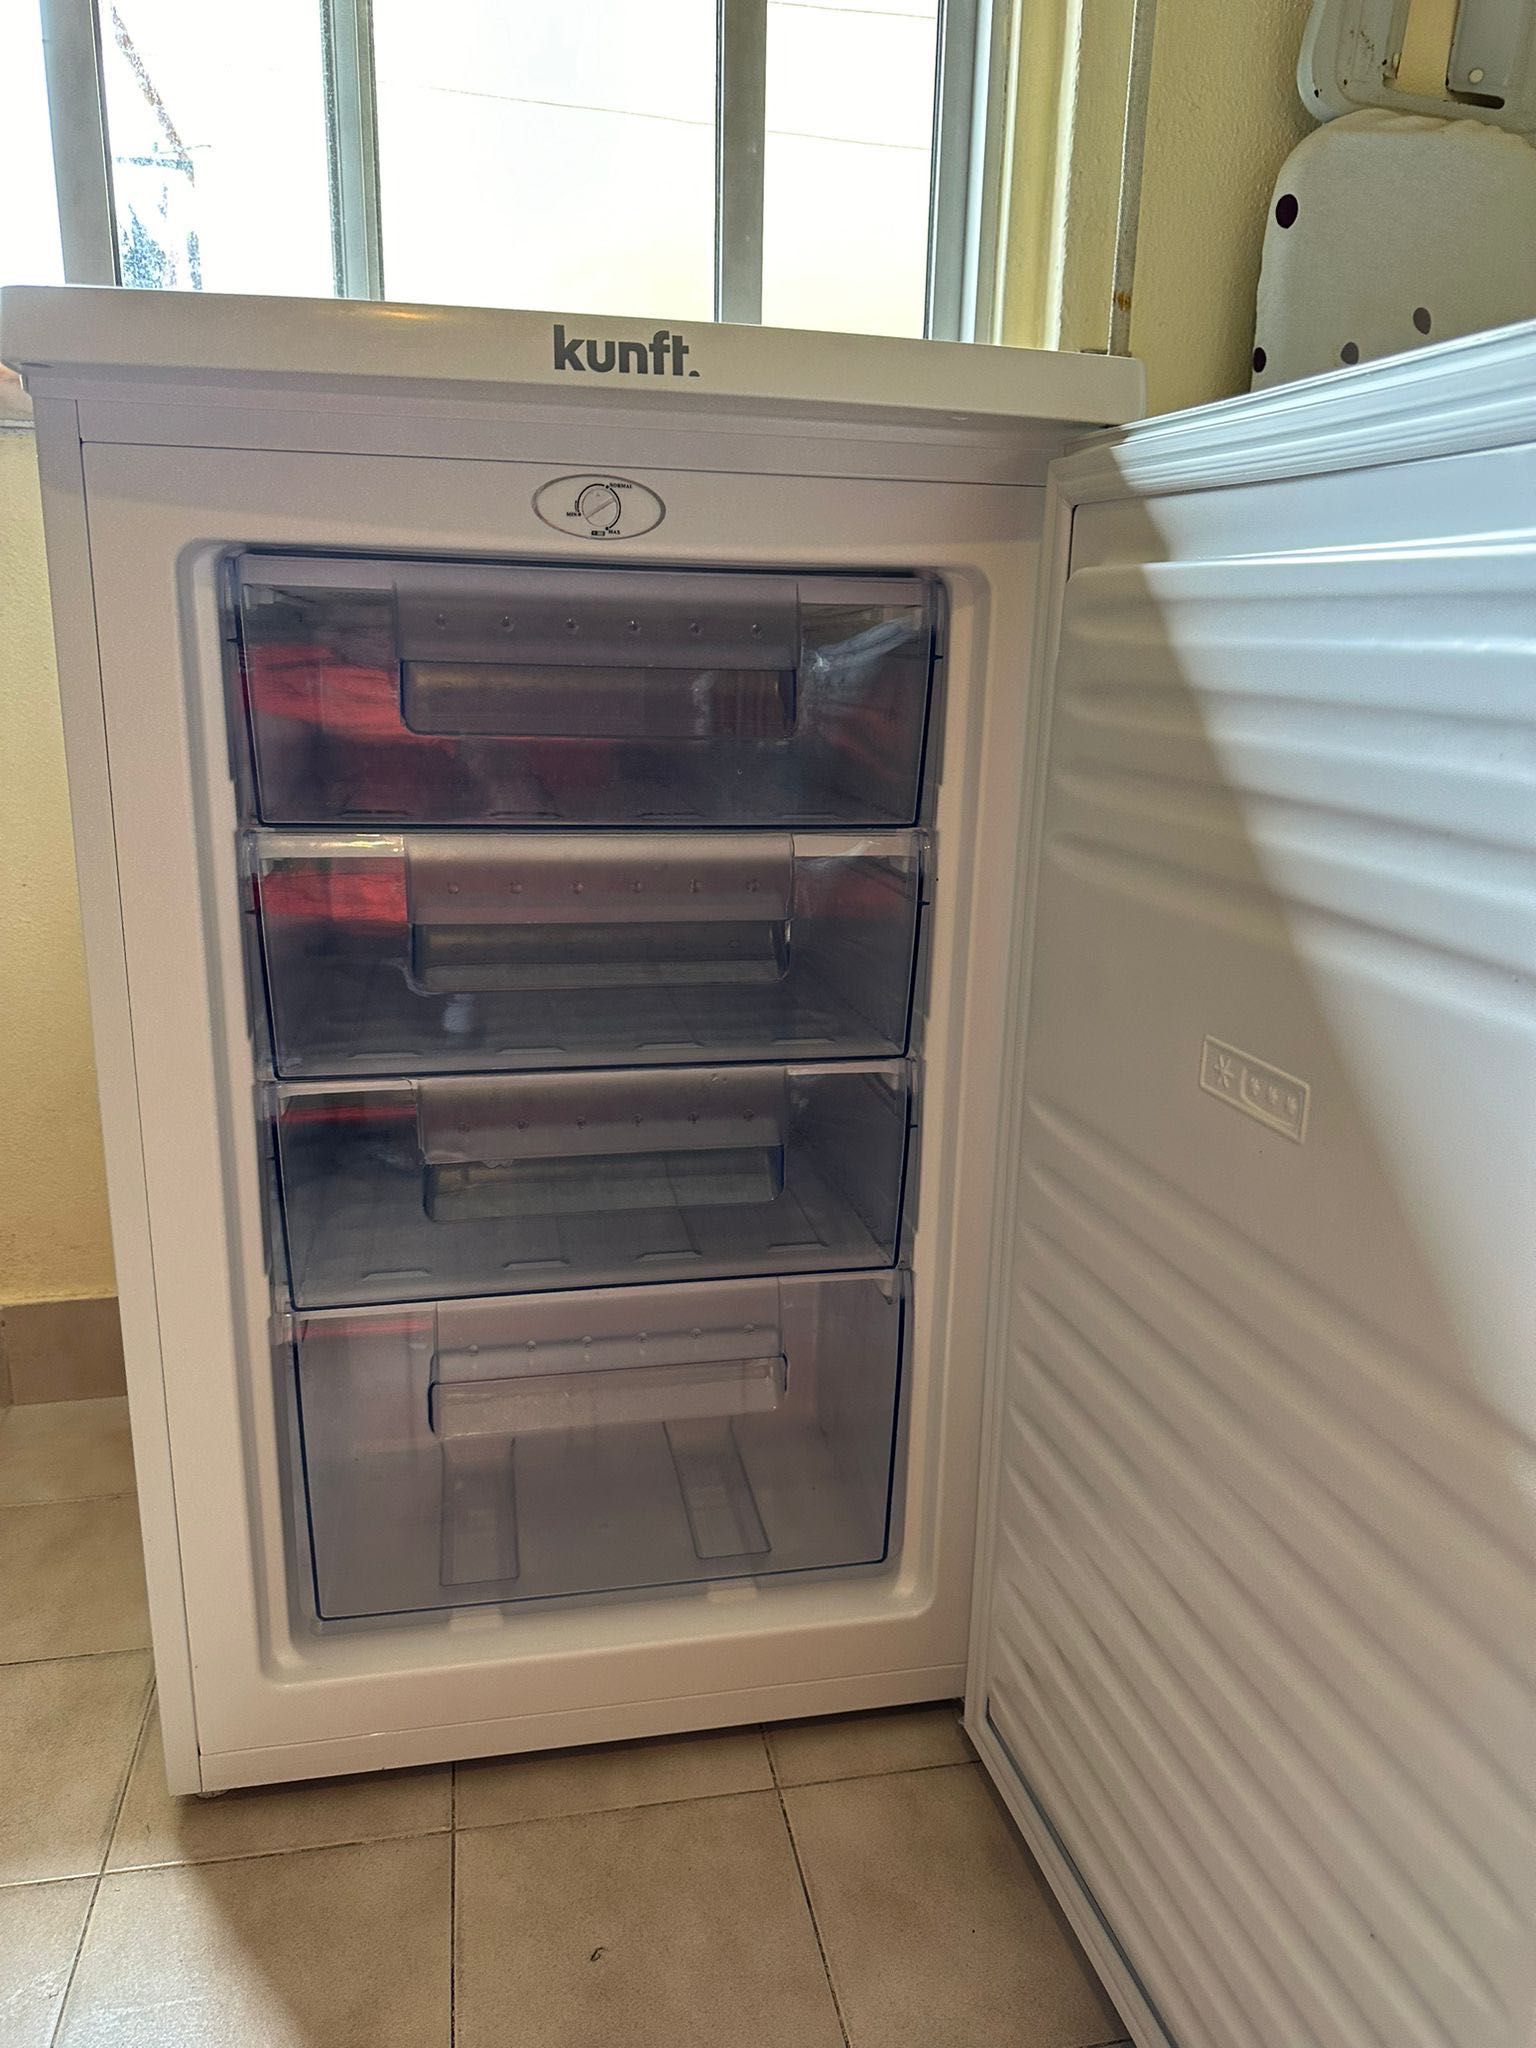 Kunft freezer small